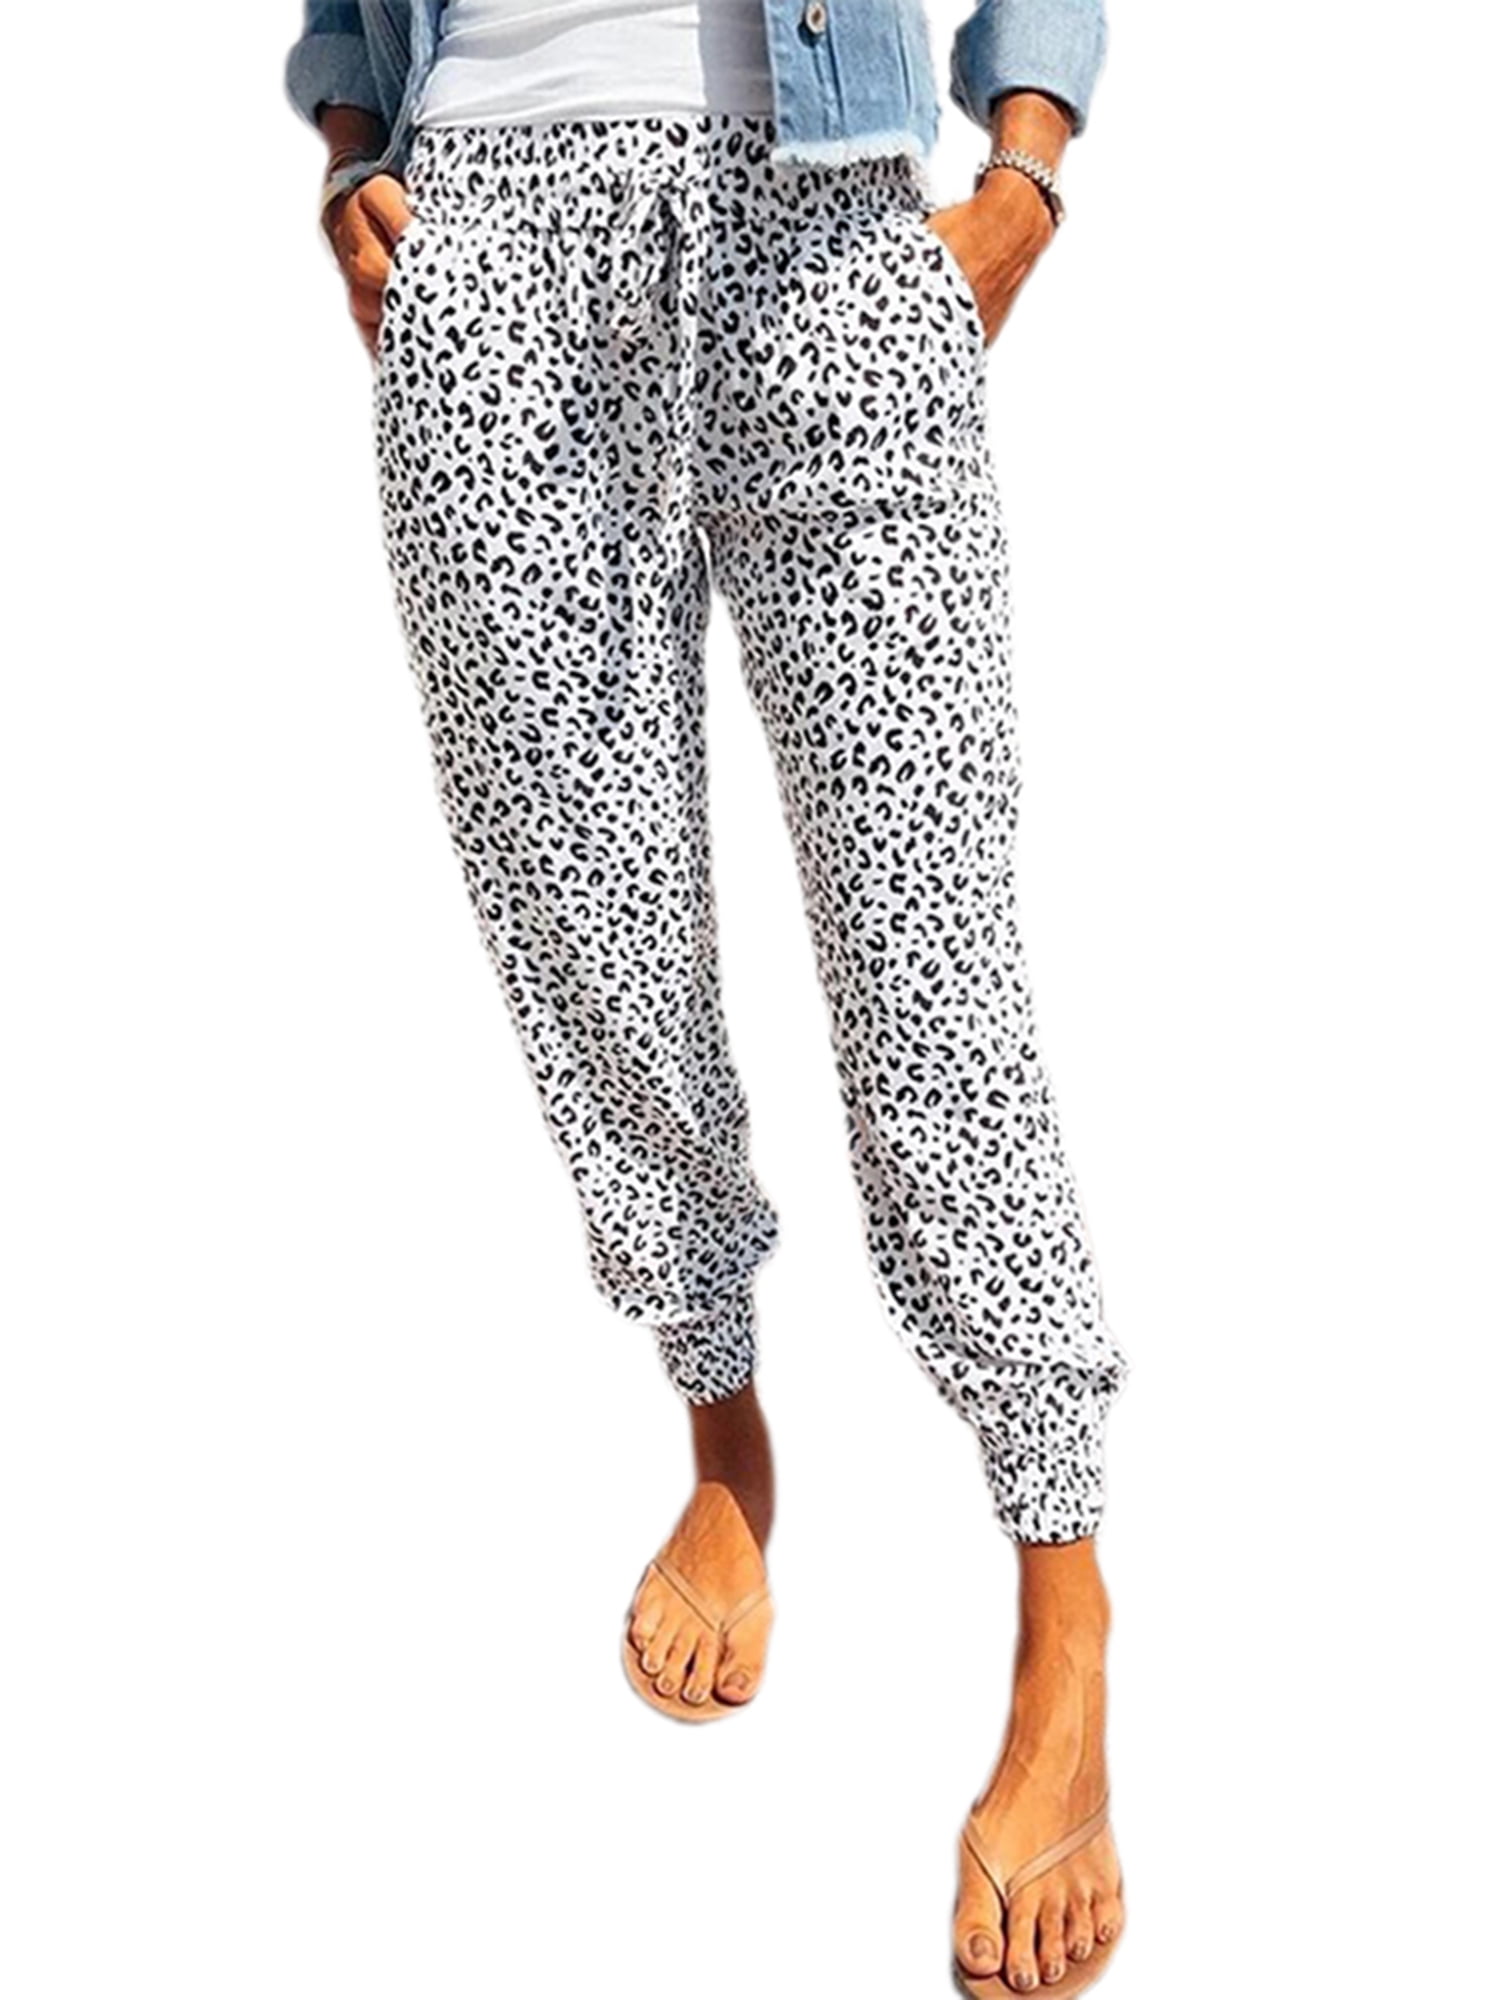 Women Casual Leopard Print Jogger Pants Drawstring Elastic Waist with Pockets  Sports Sweatpants 